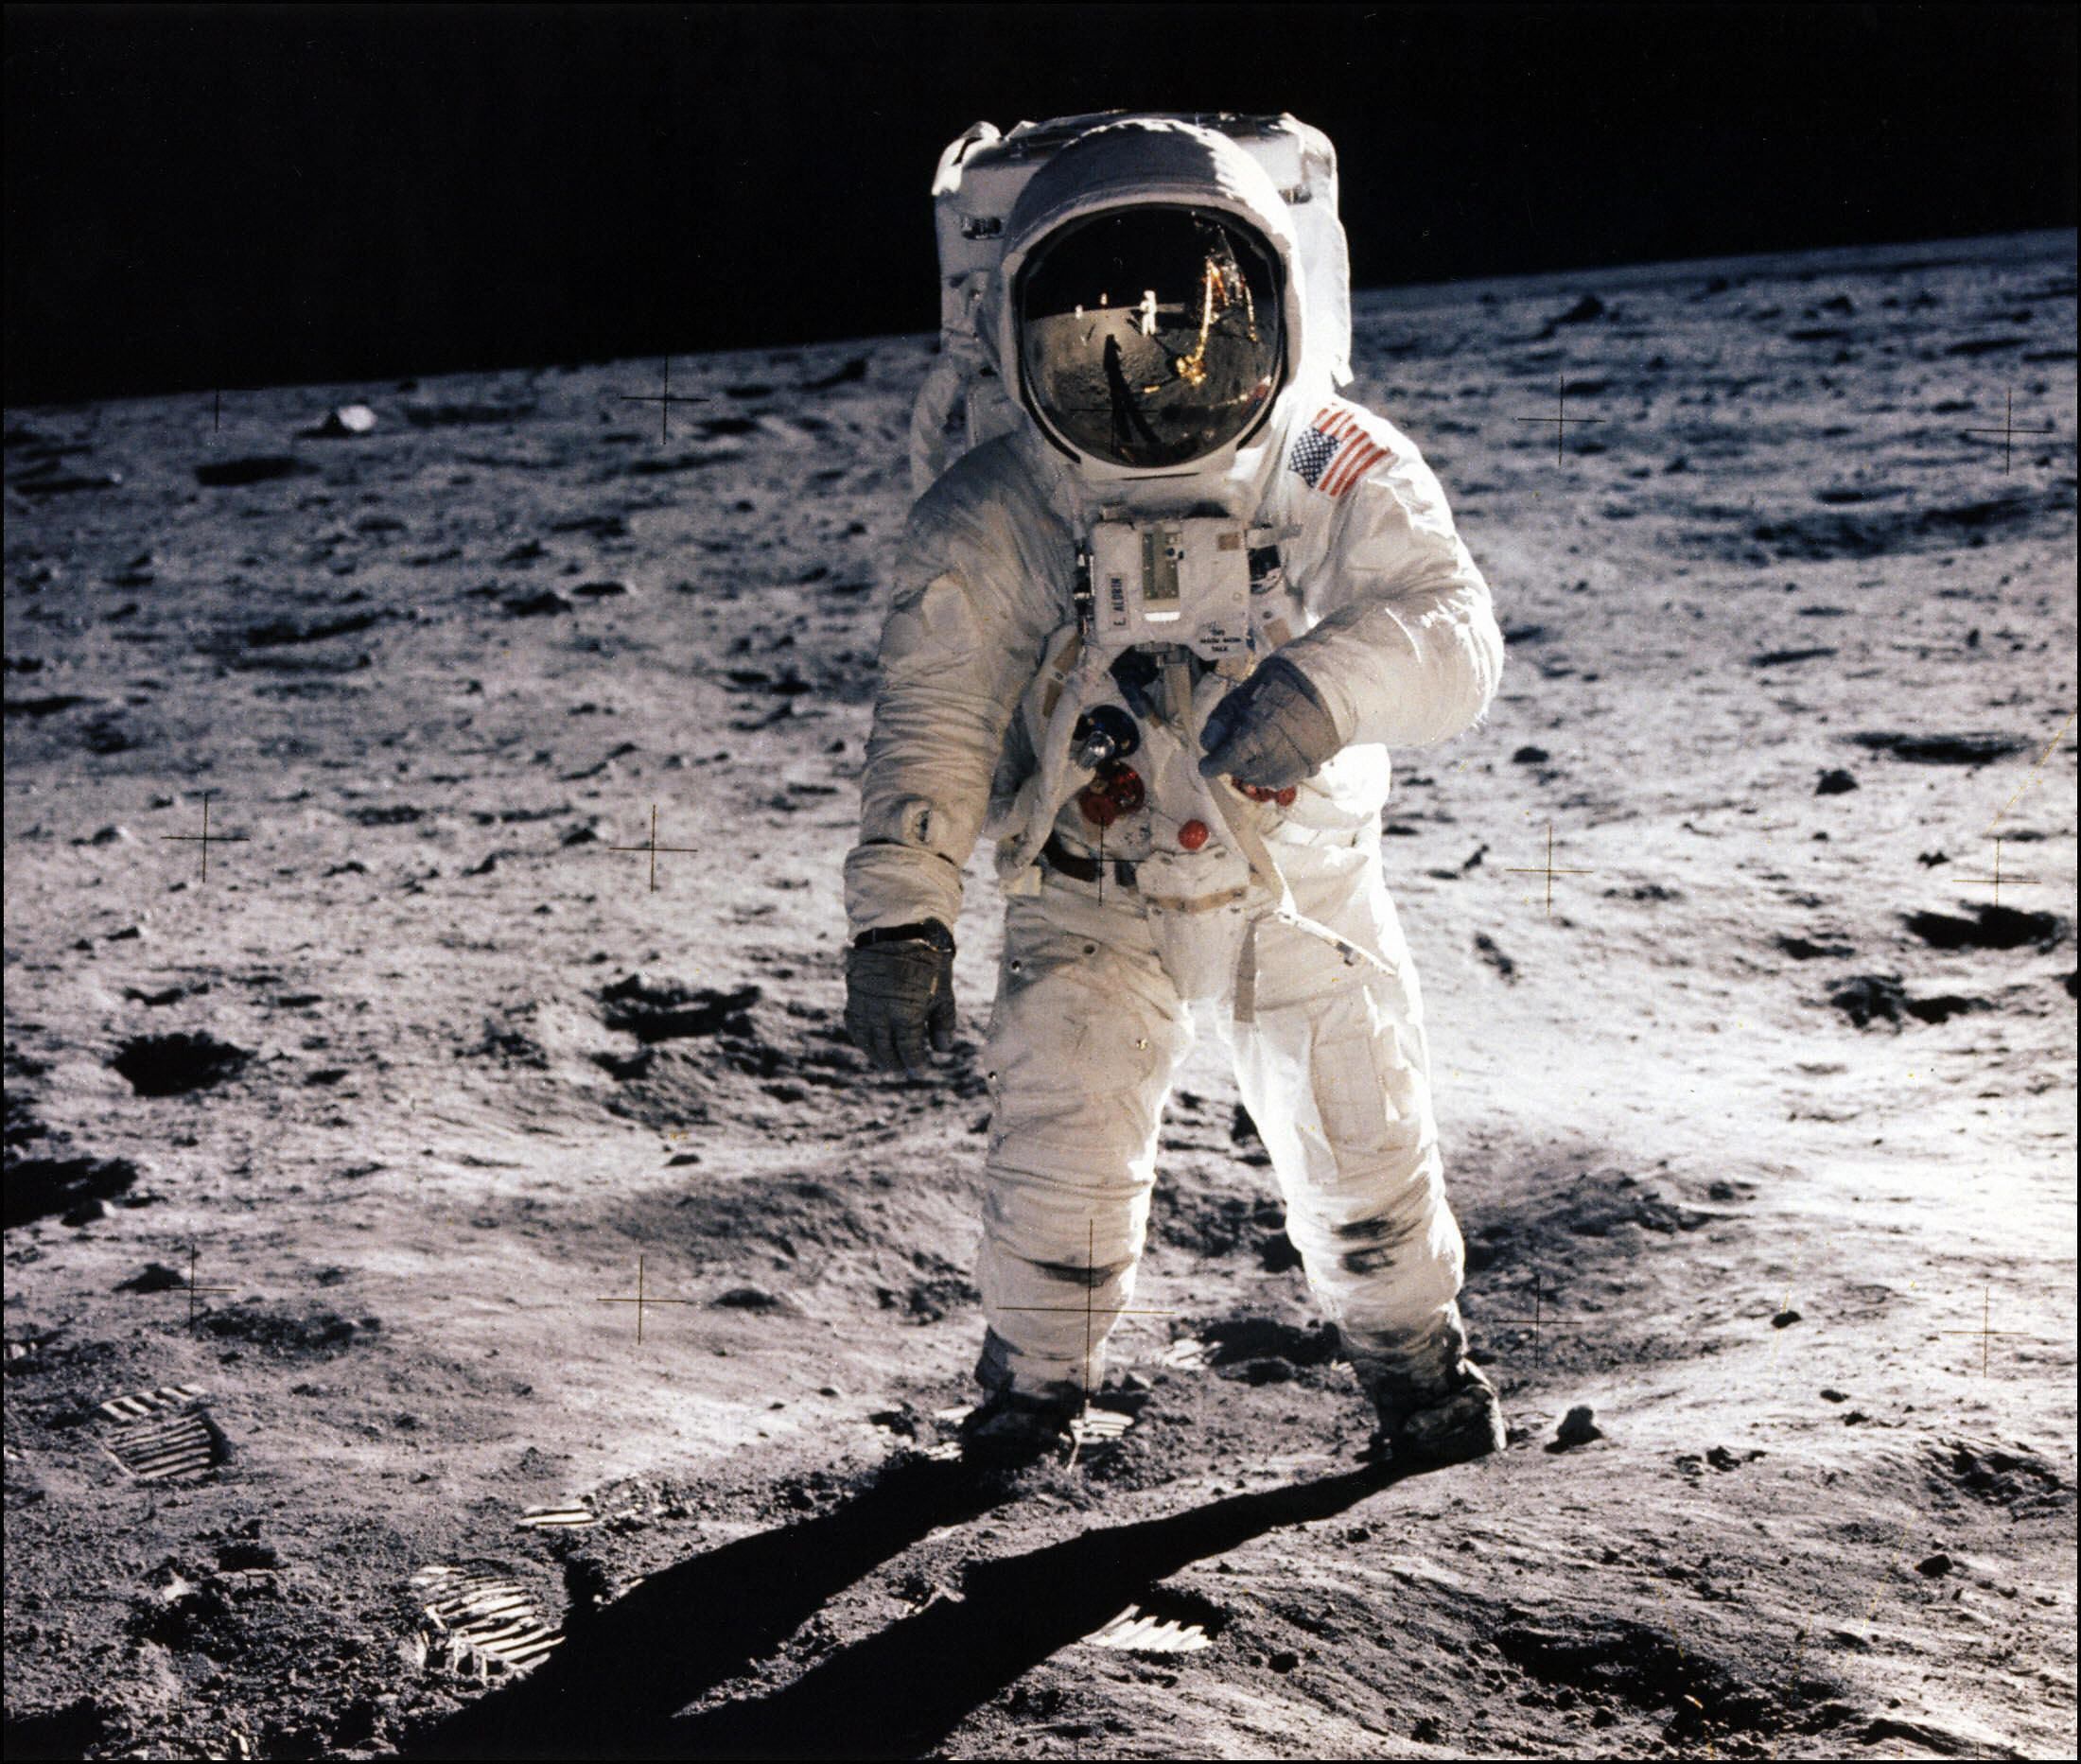 1973 moon mission